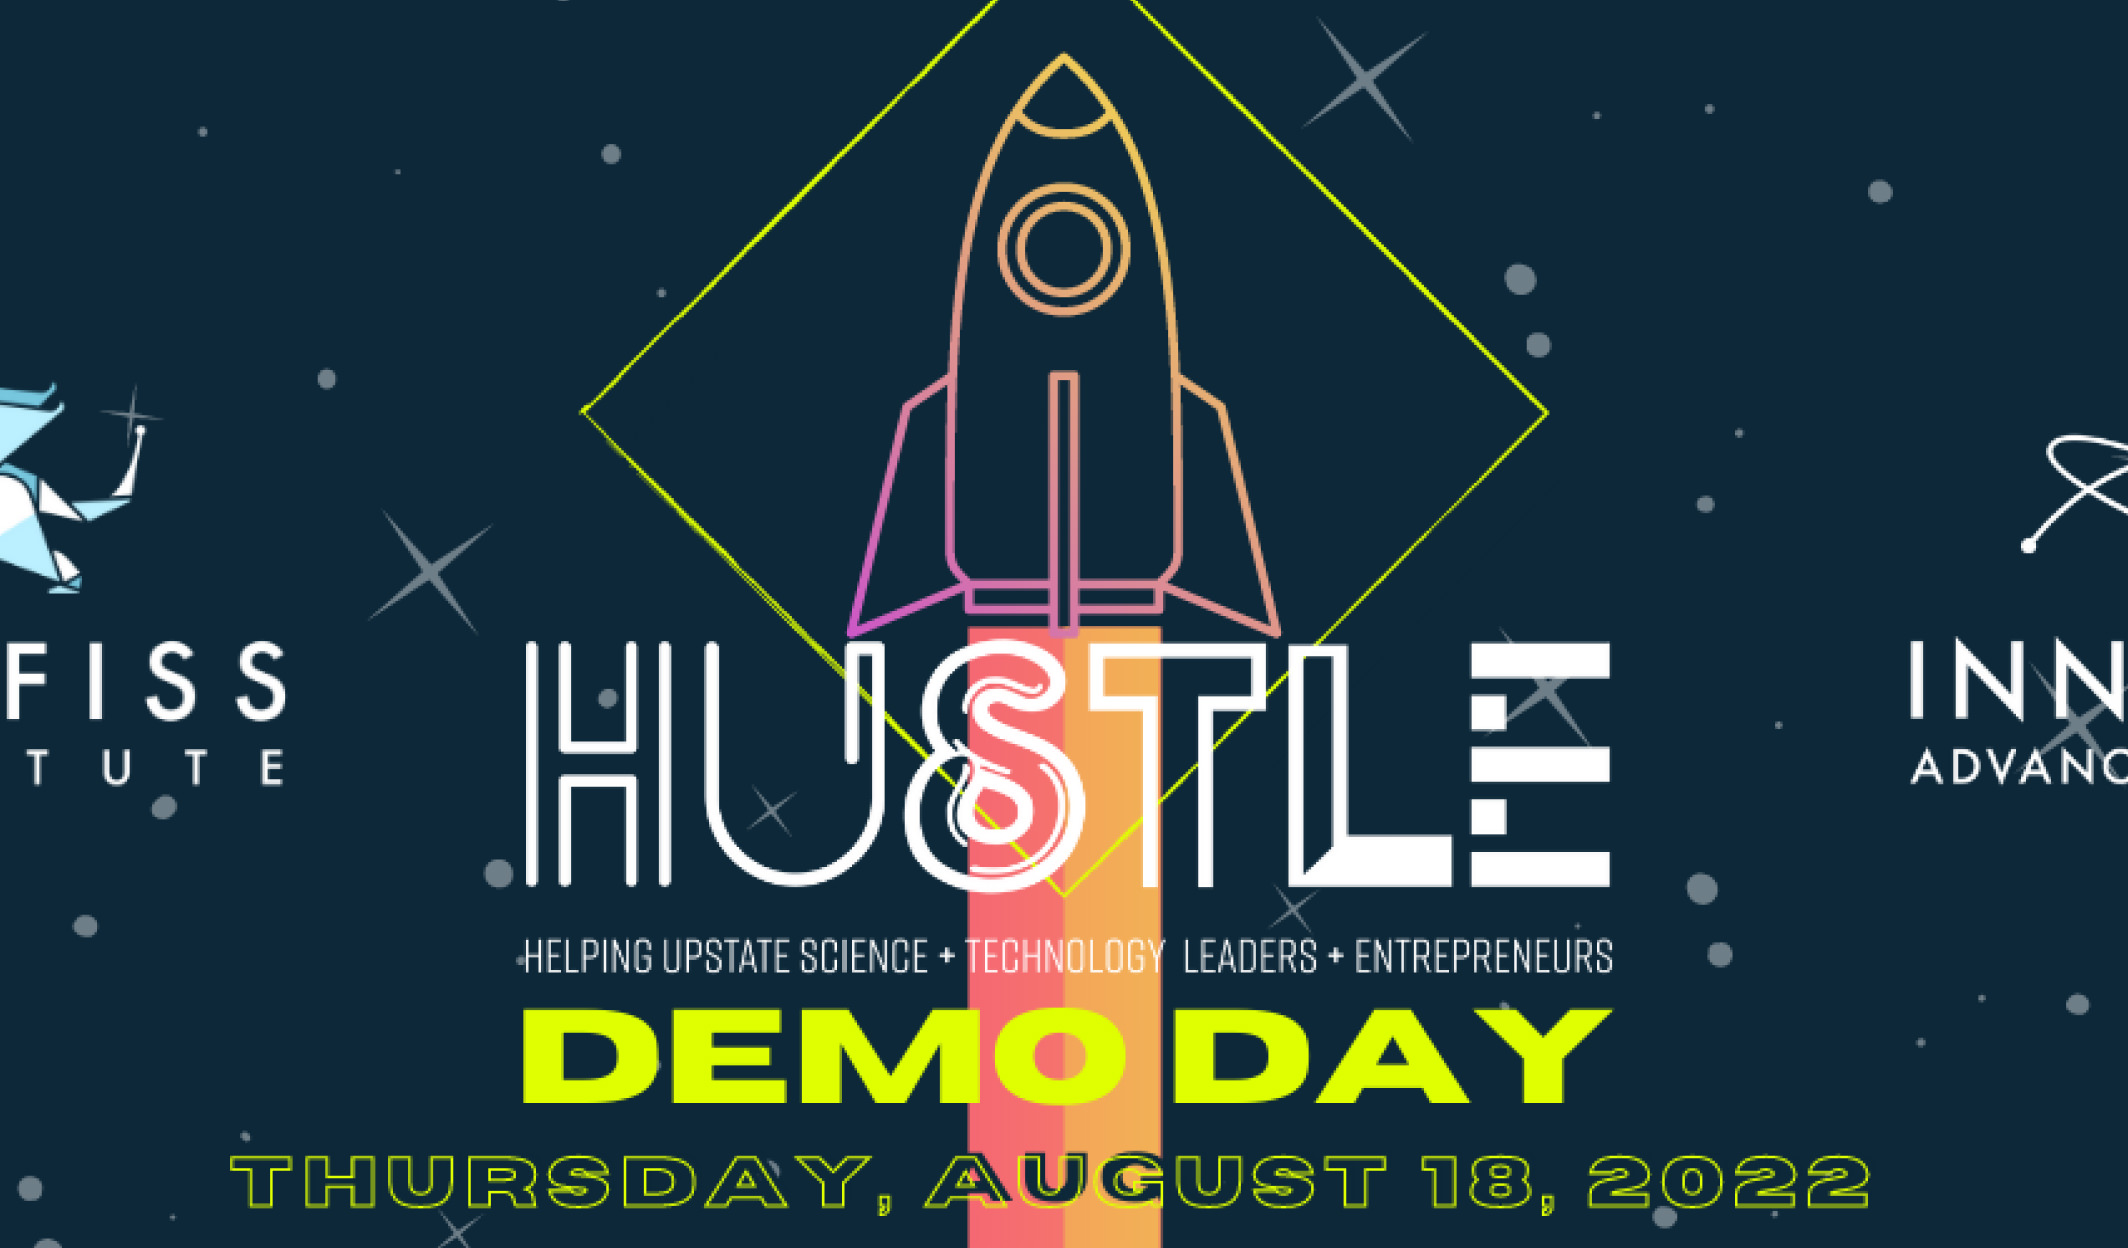 Hustle Demo Day 2022